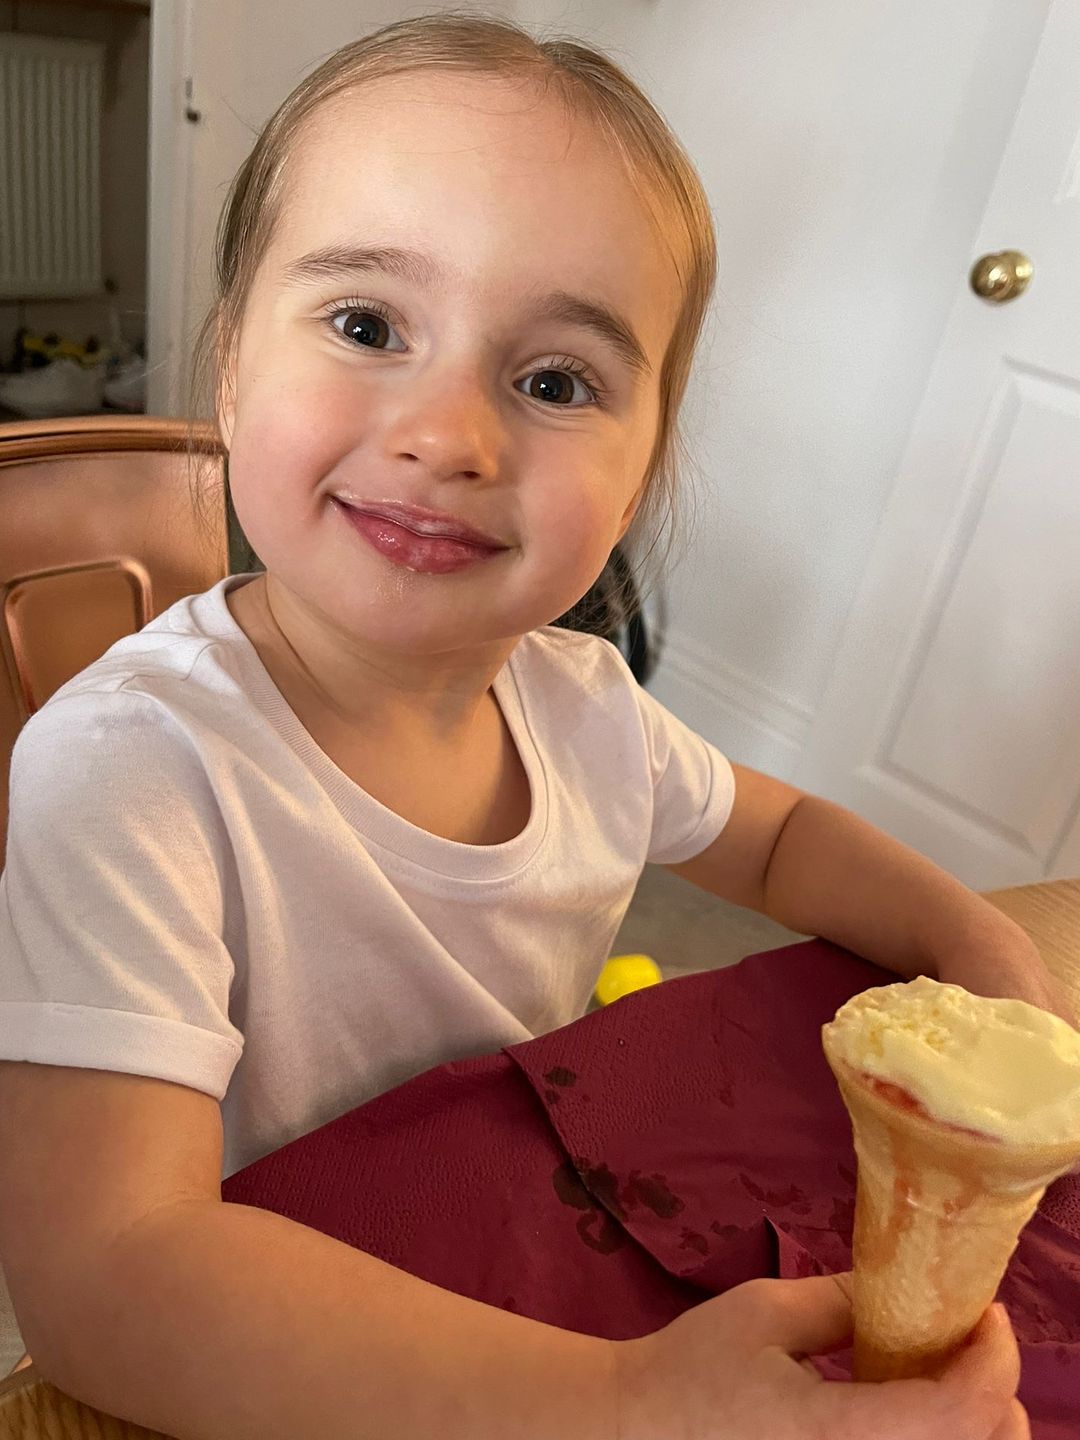 Ella Jordan eats an ice cream